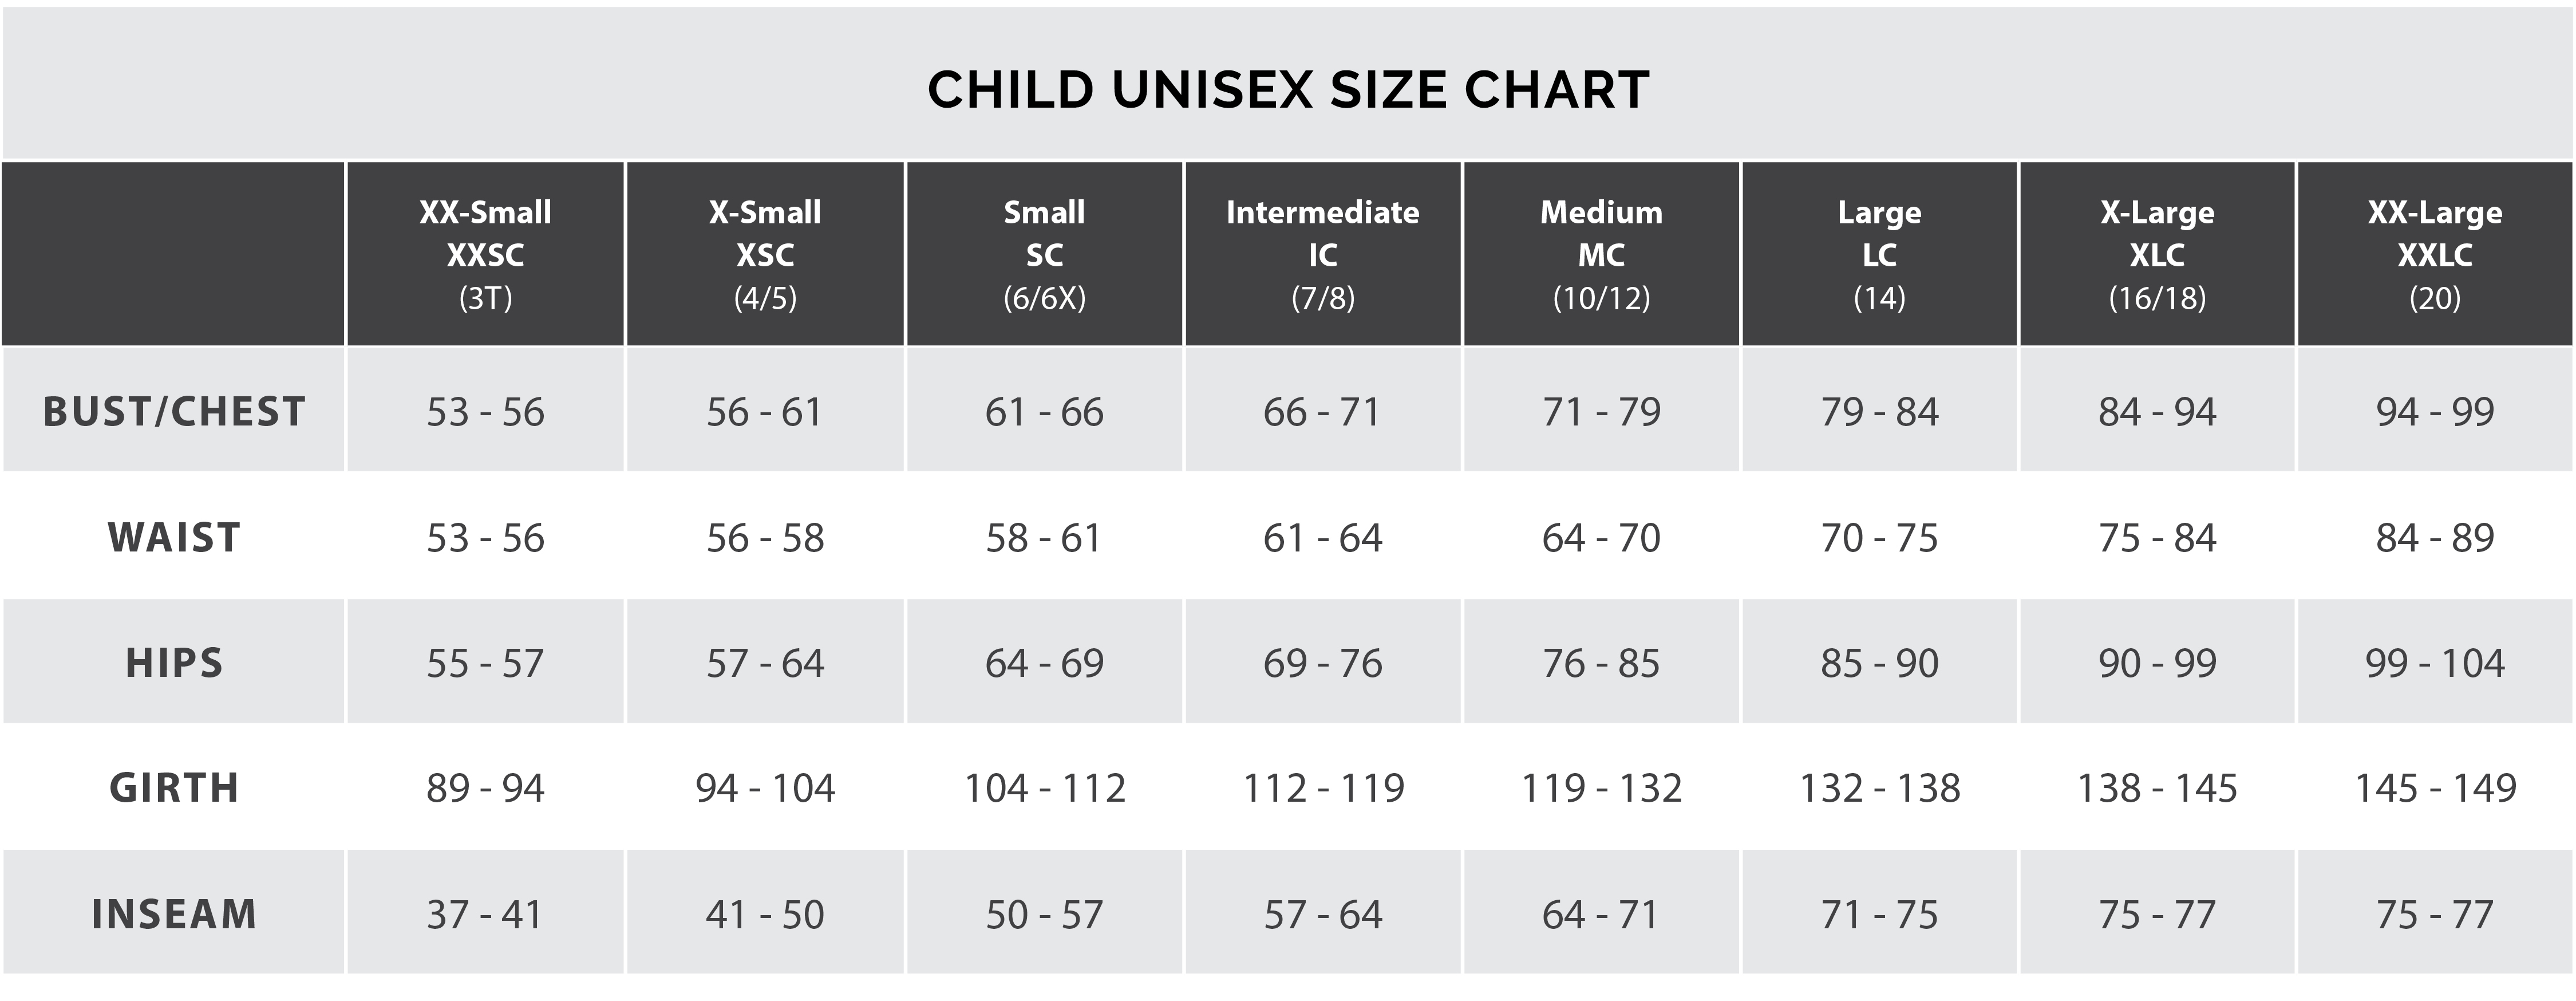 child unisex size chart inches